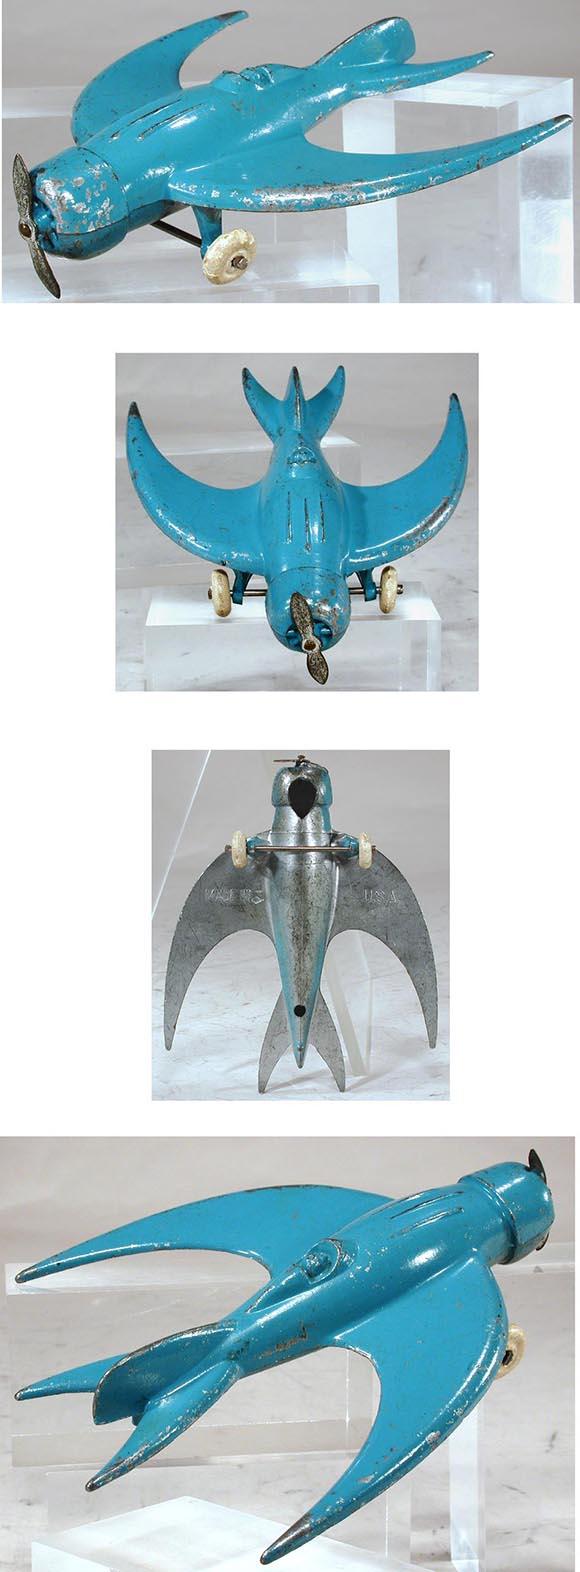 c.1935 Lincoln White Metal Works, Futuristic Swallow-Tail Airplane